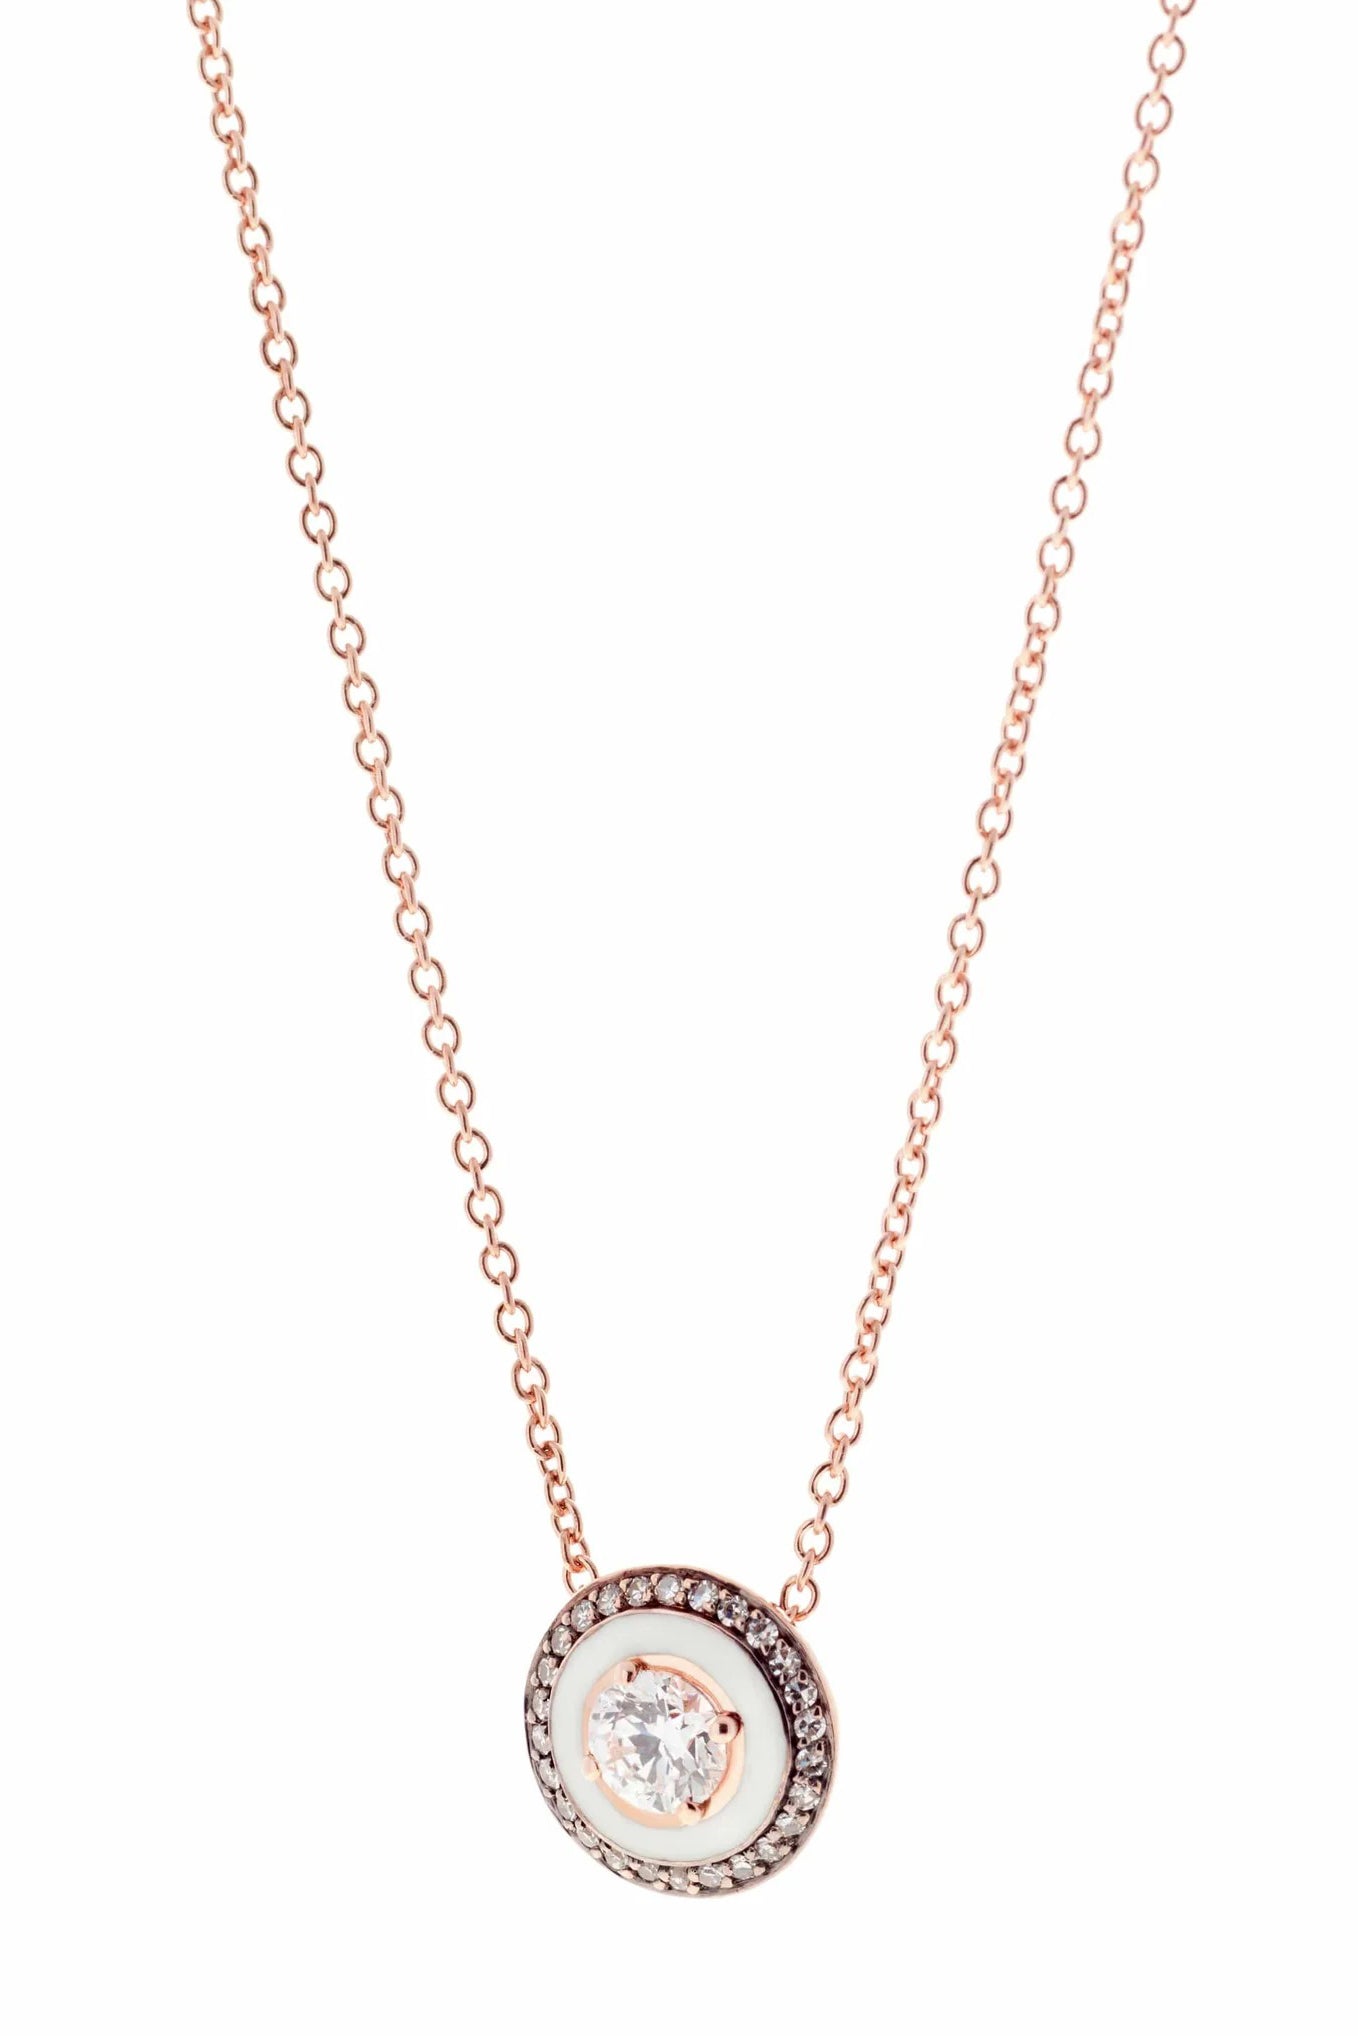 SELIM MOUZANNAR-White Enamel and Diamond Pendant Necklace-ROSE GOLD